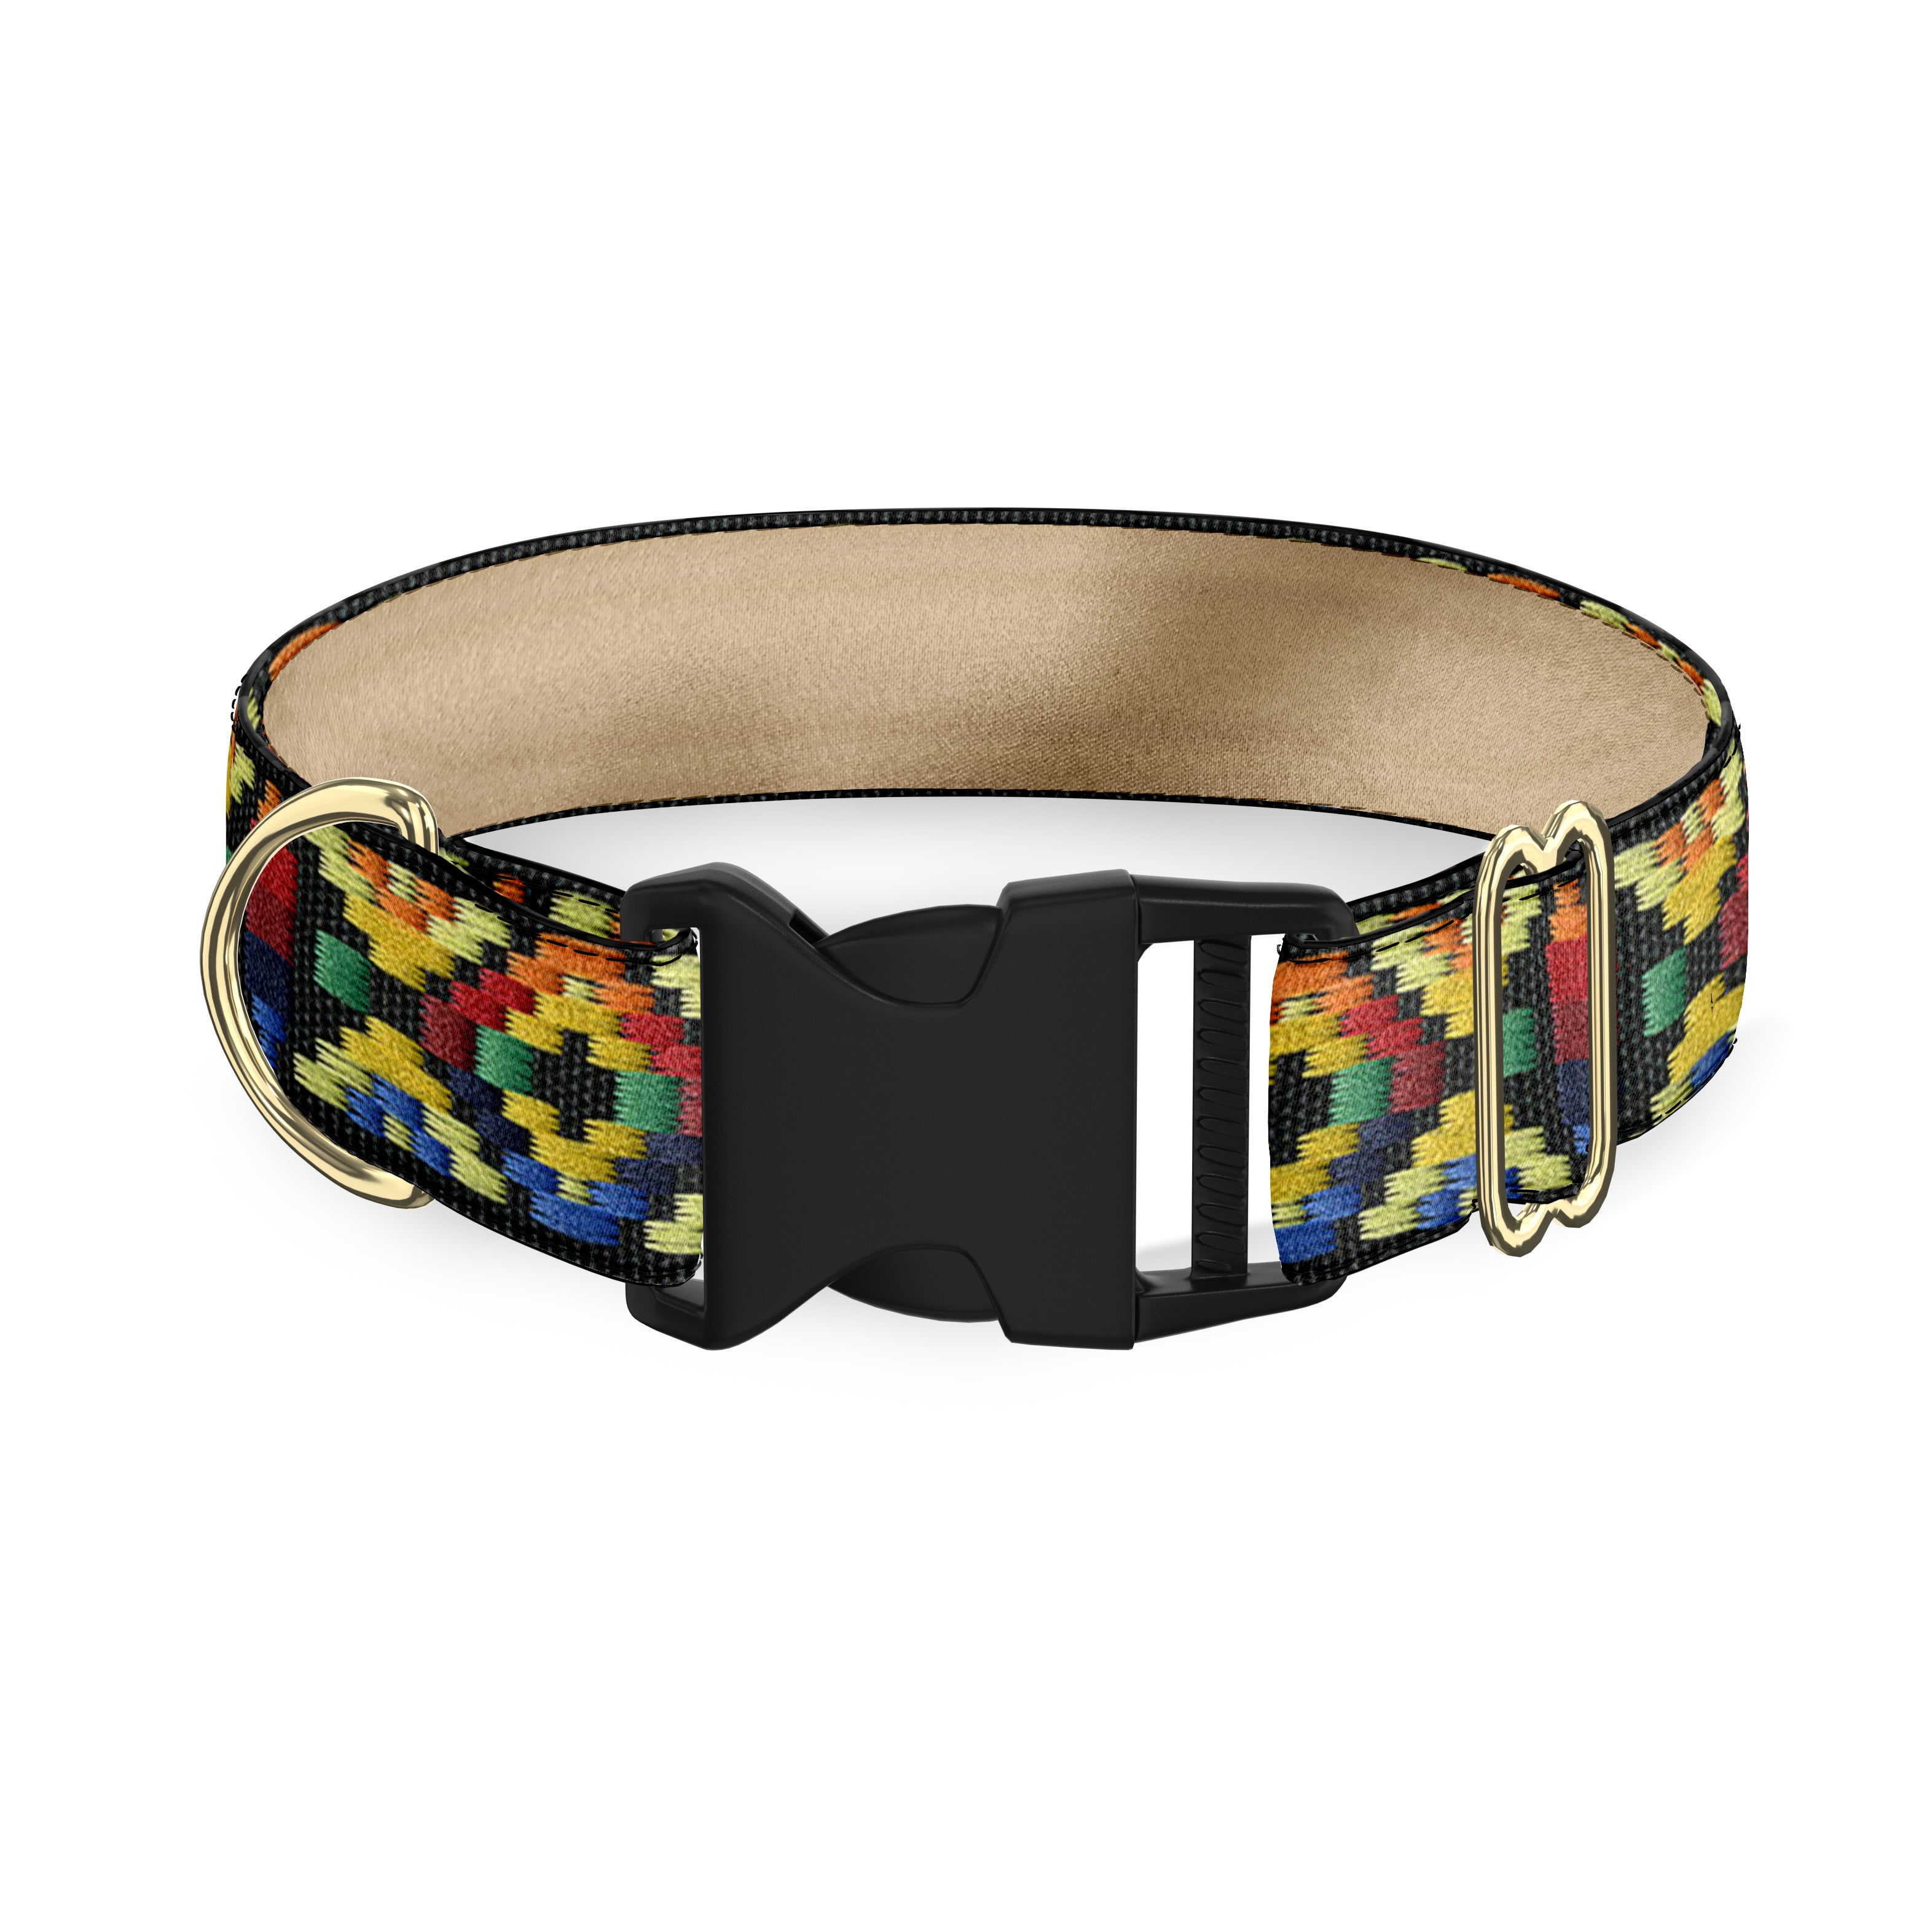 Louis Vuitton Dog Harness and Leash - Royal Dog Collars - Handmade